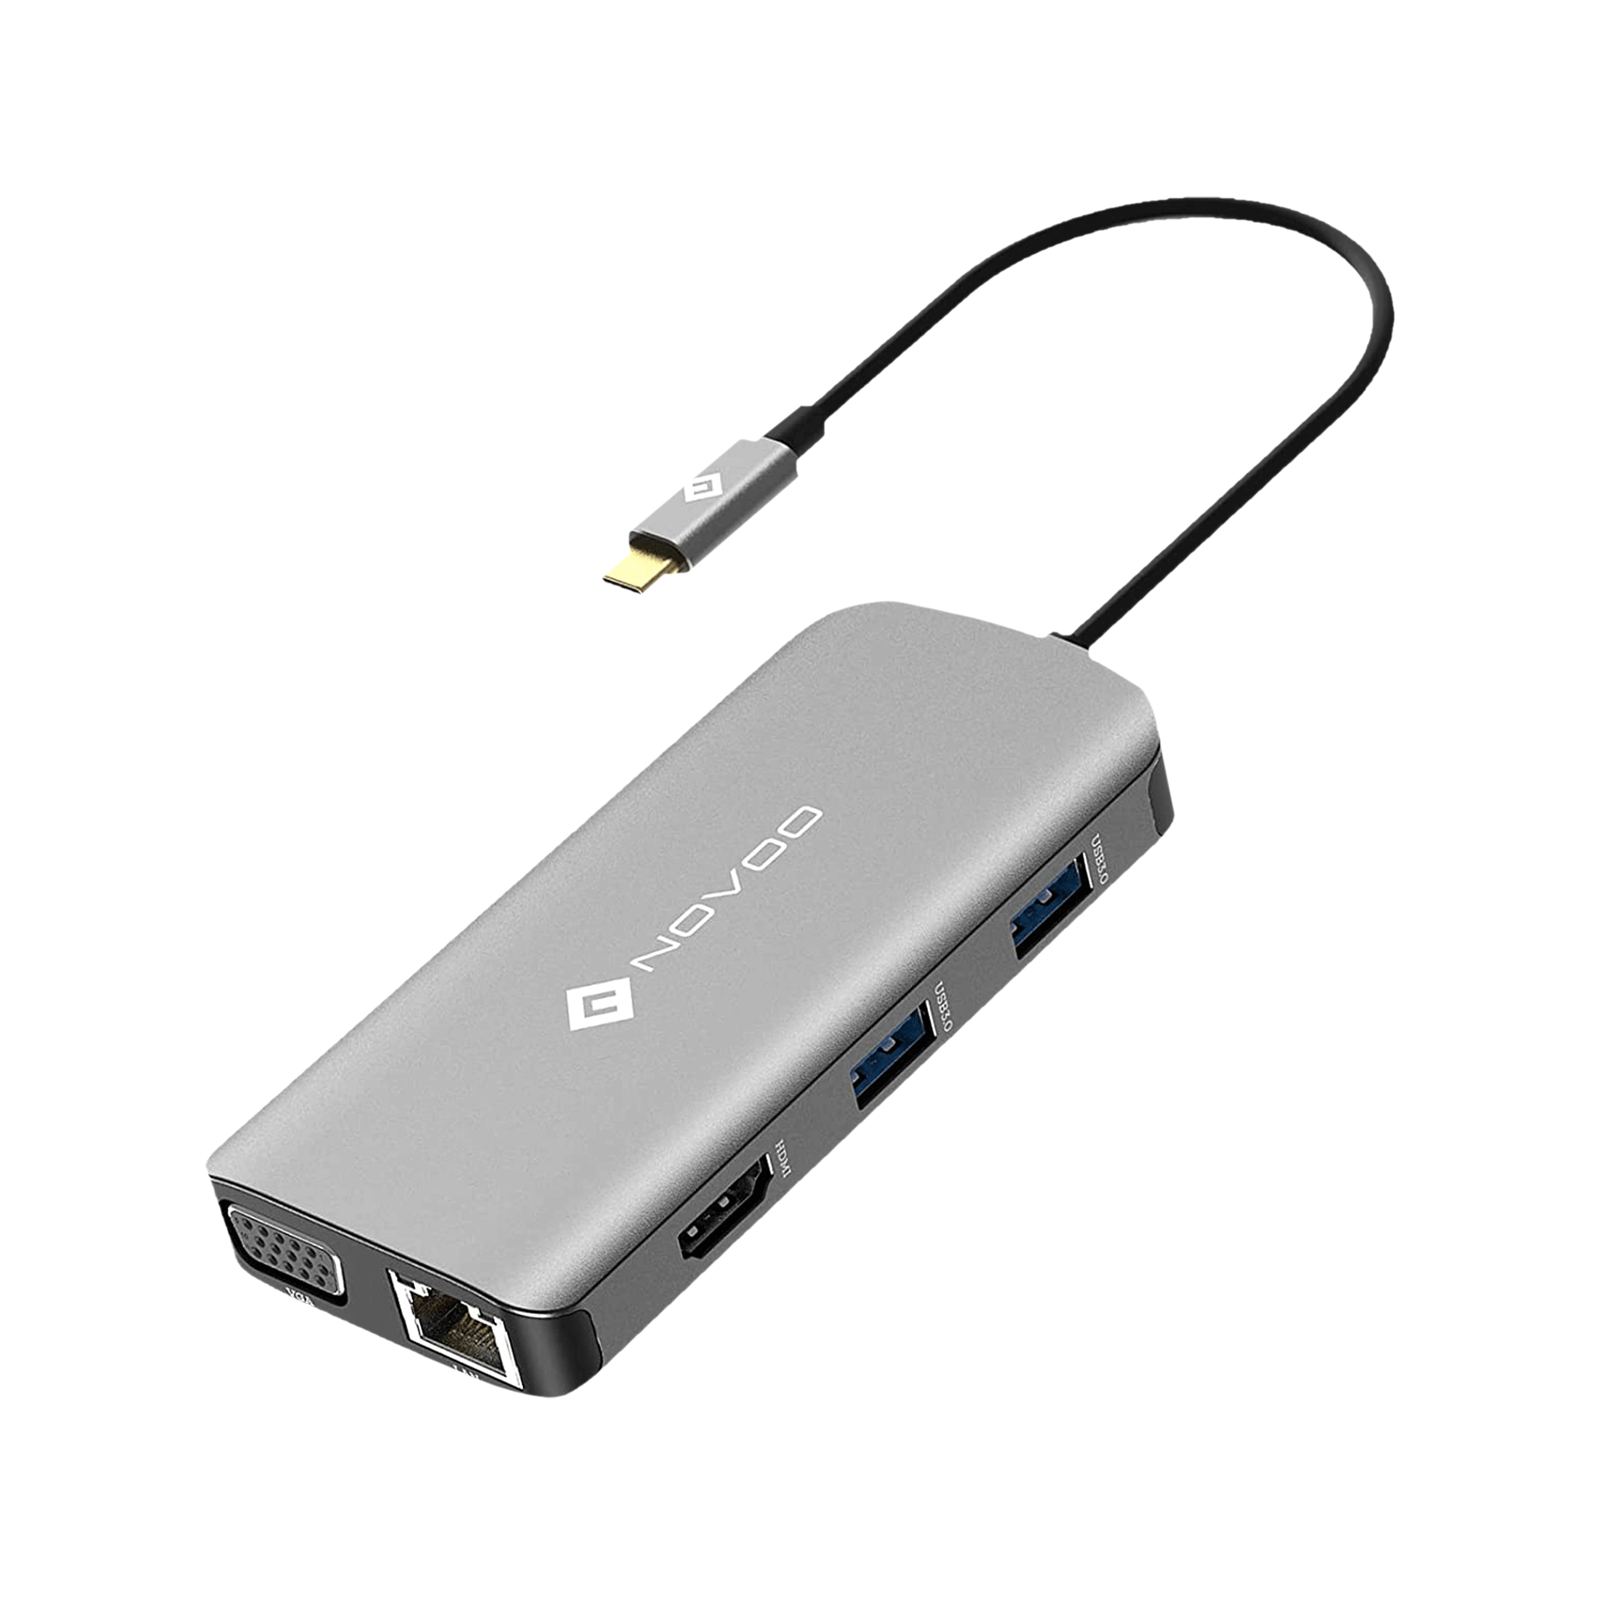 NOVOO 9-in-1 USB 3.1 Type C to USB 3.0 Type A, USB 3.0 Type C, HDMI, VGA Port, LAN Port, SD Card Slot, TF Card USB Hub (Pass-Through Charging, Dark Grey)